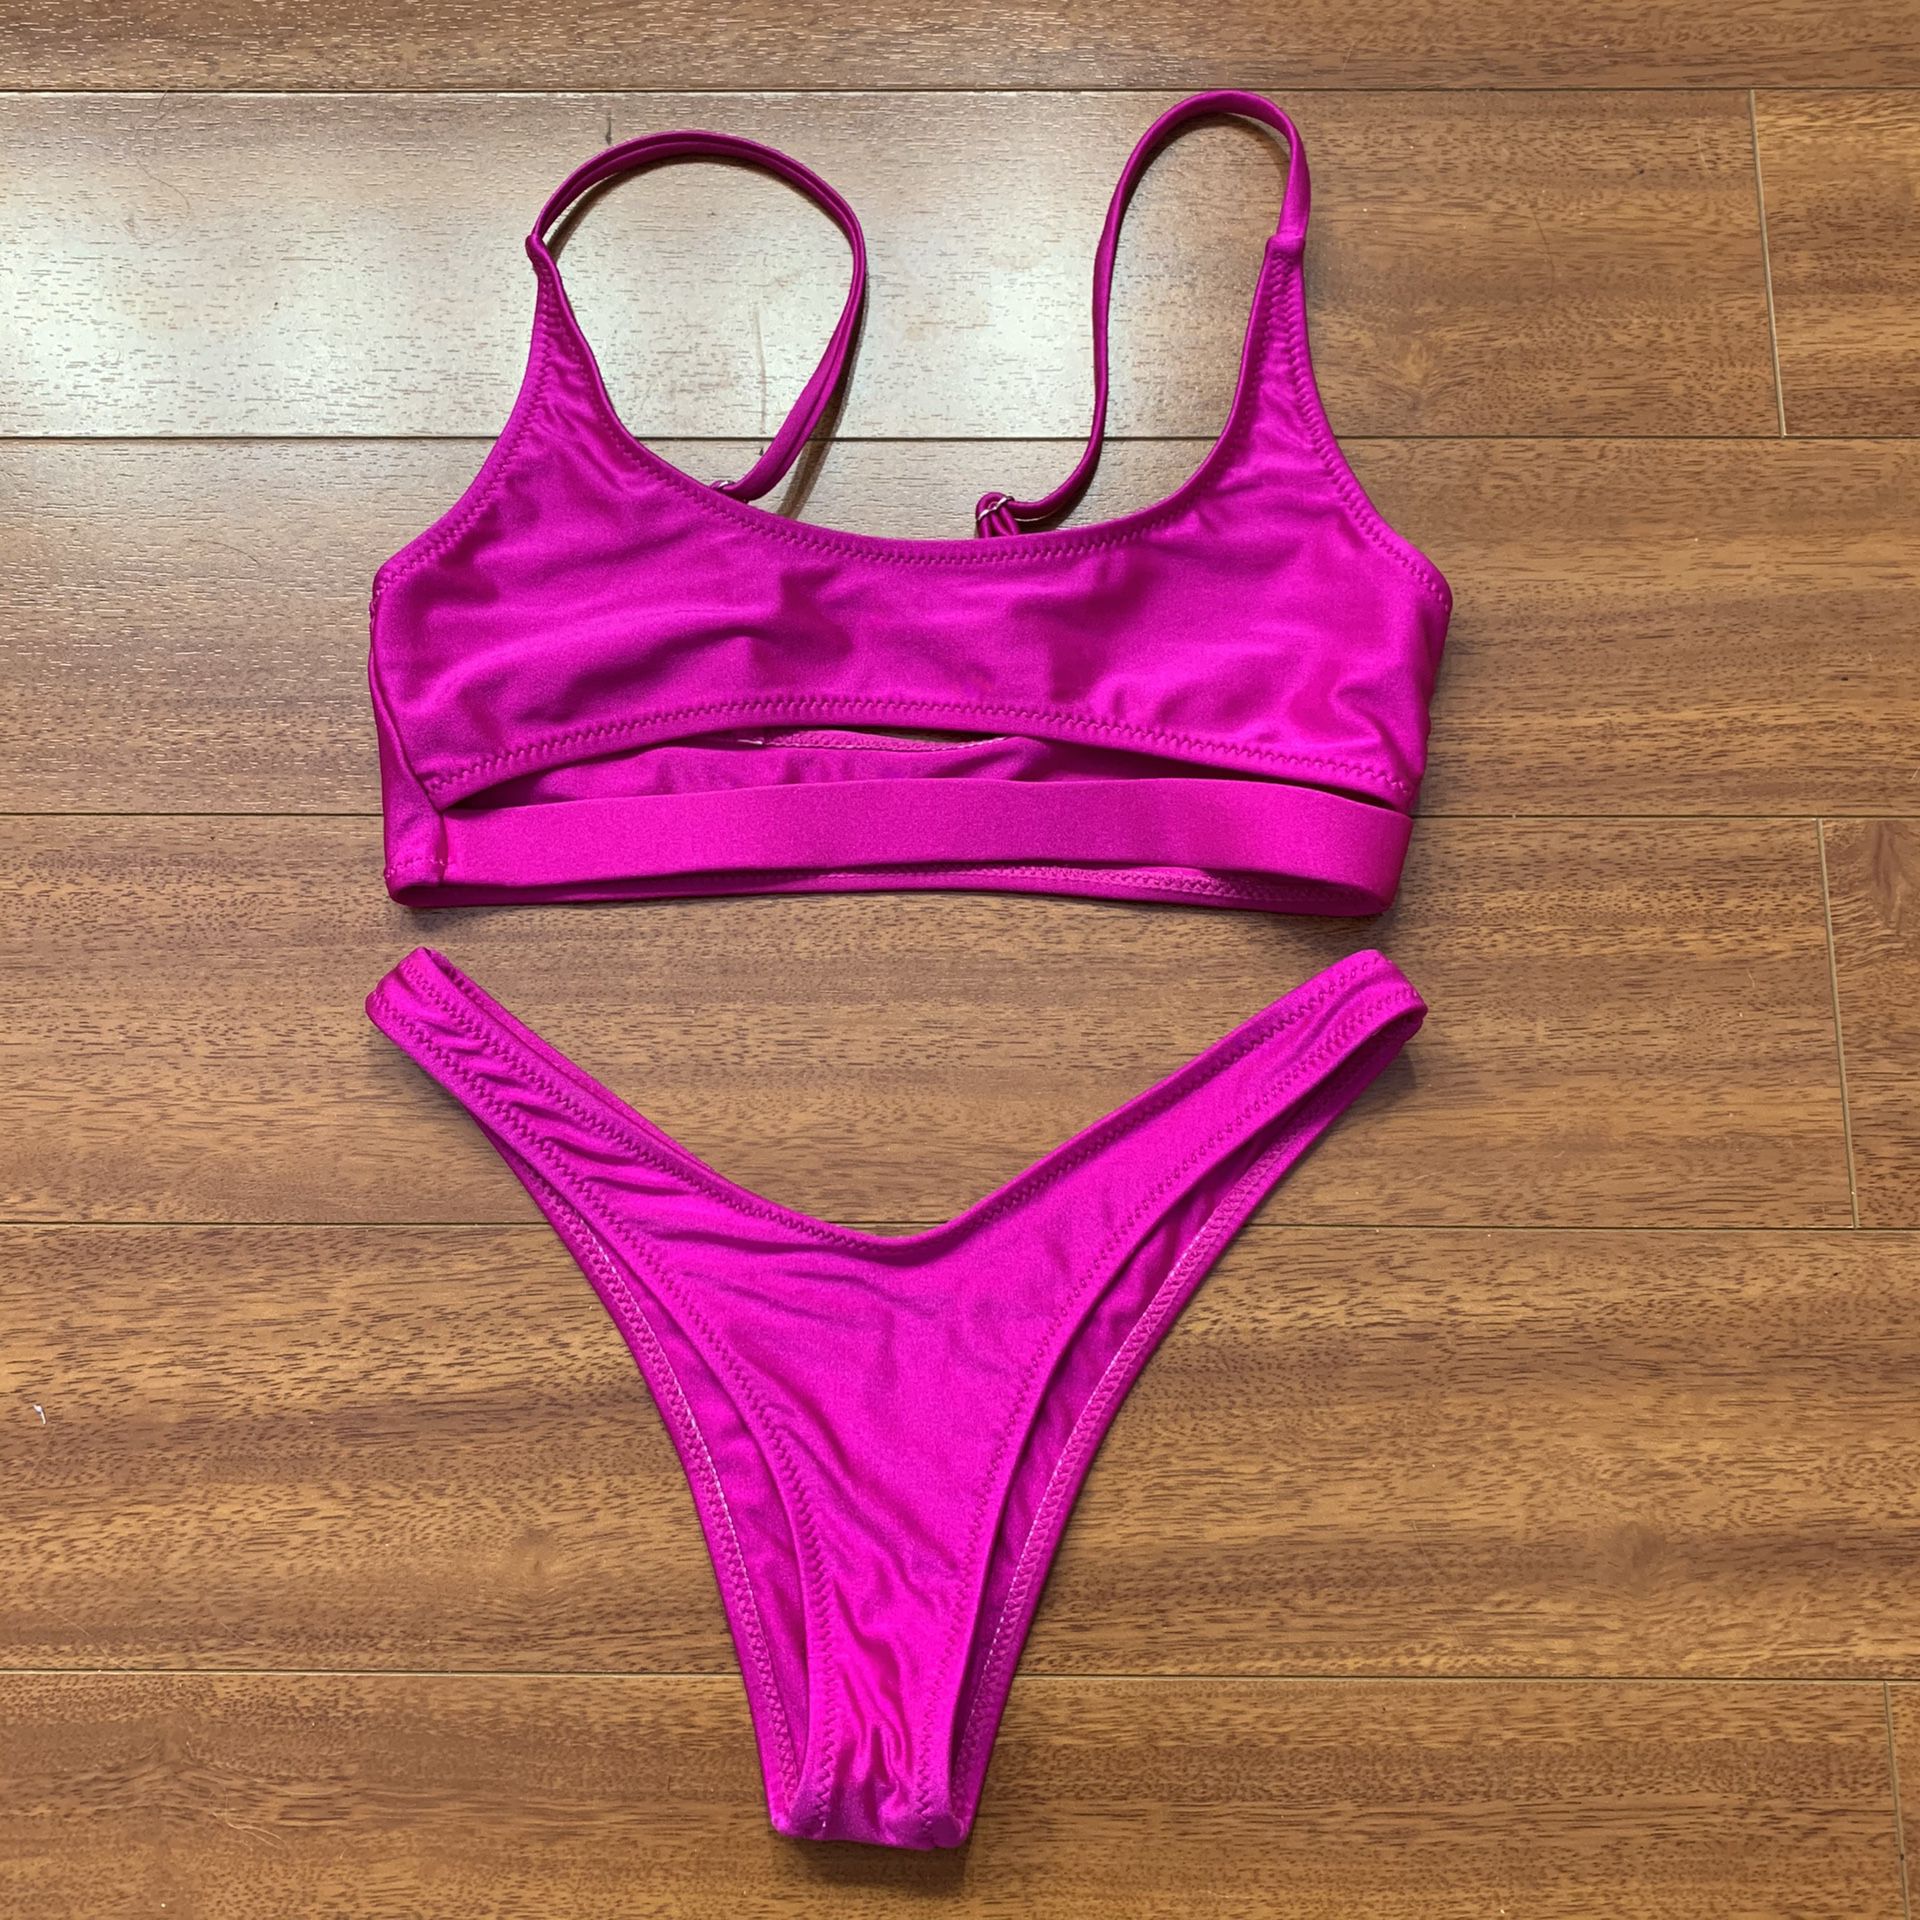 Brand new hot pink bikini